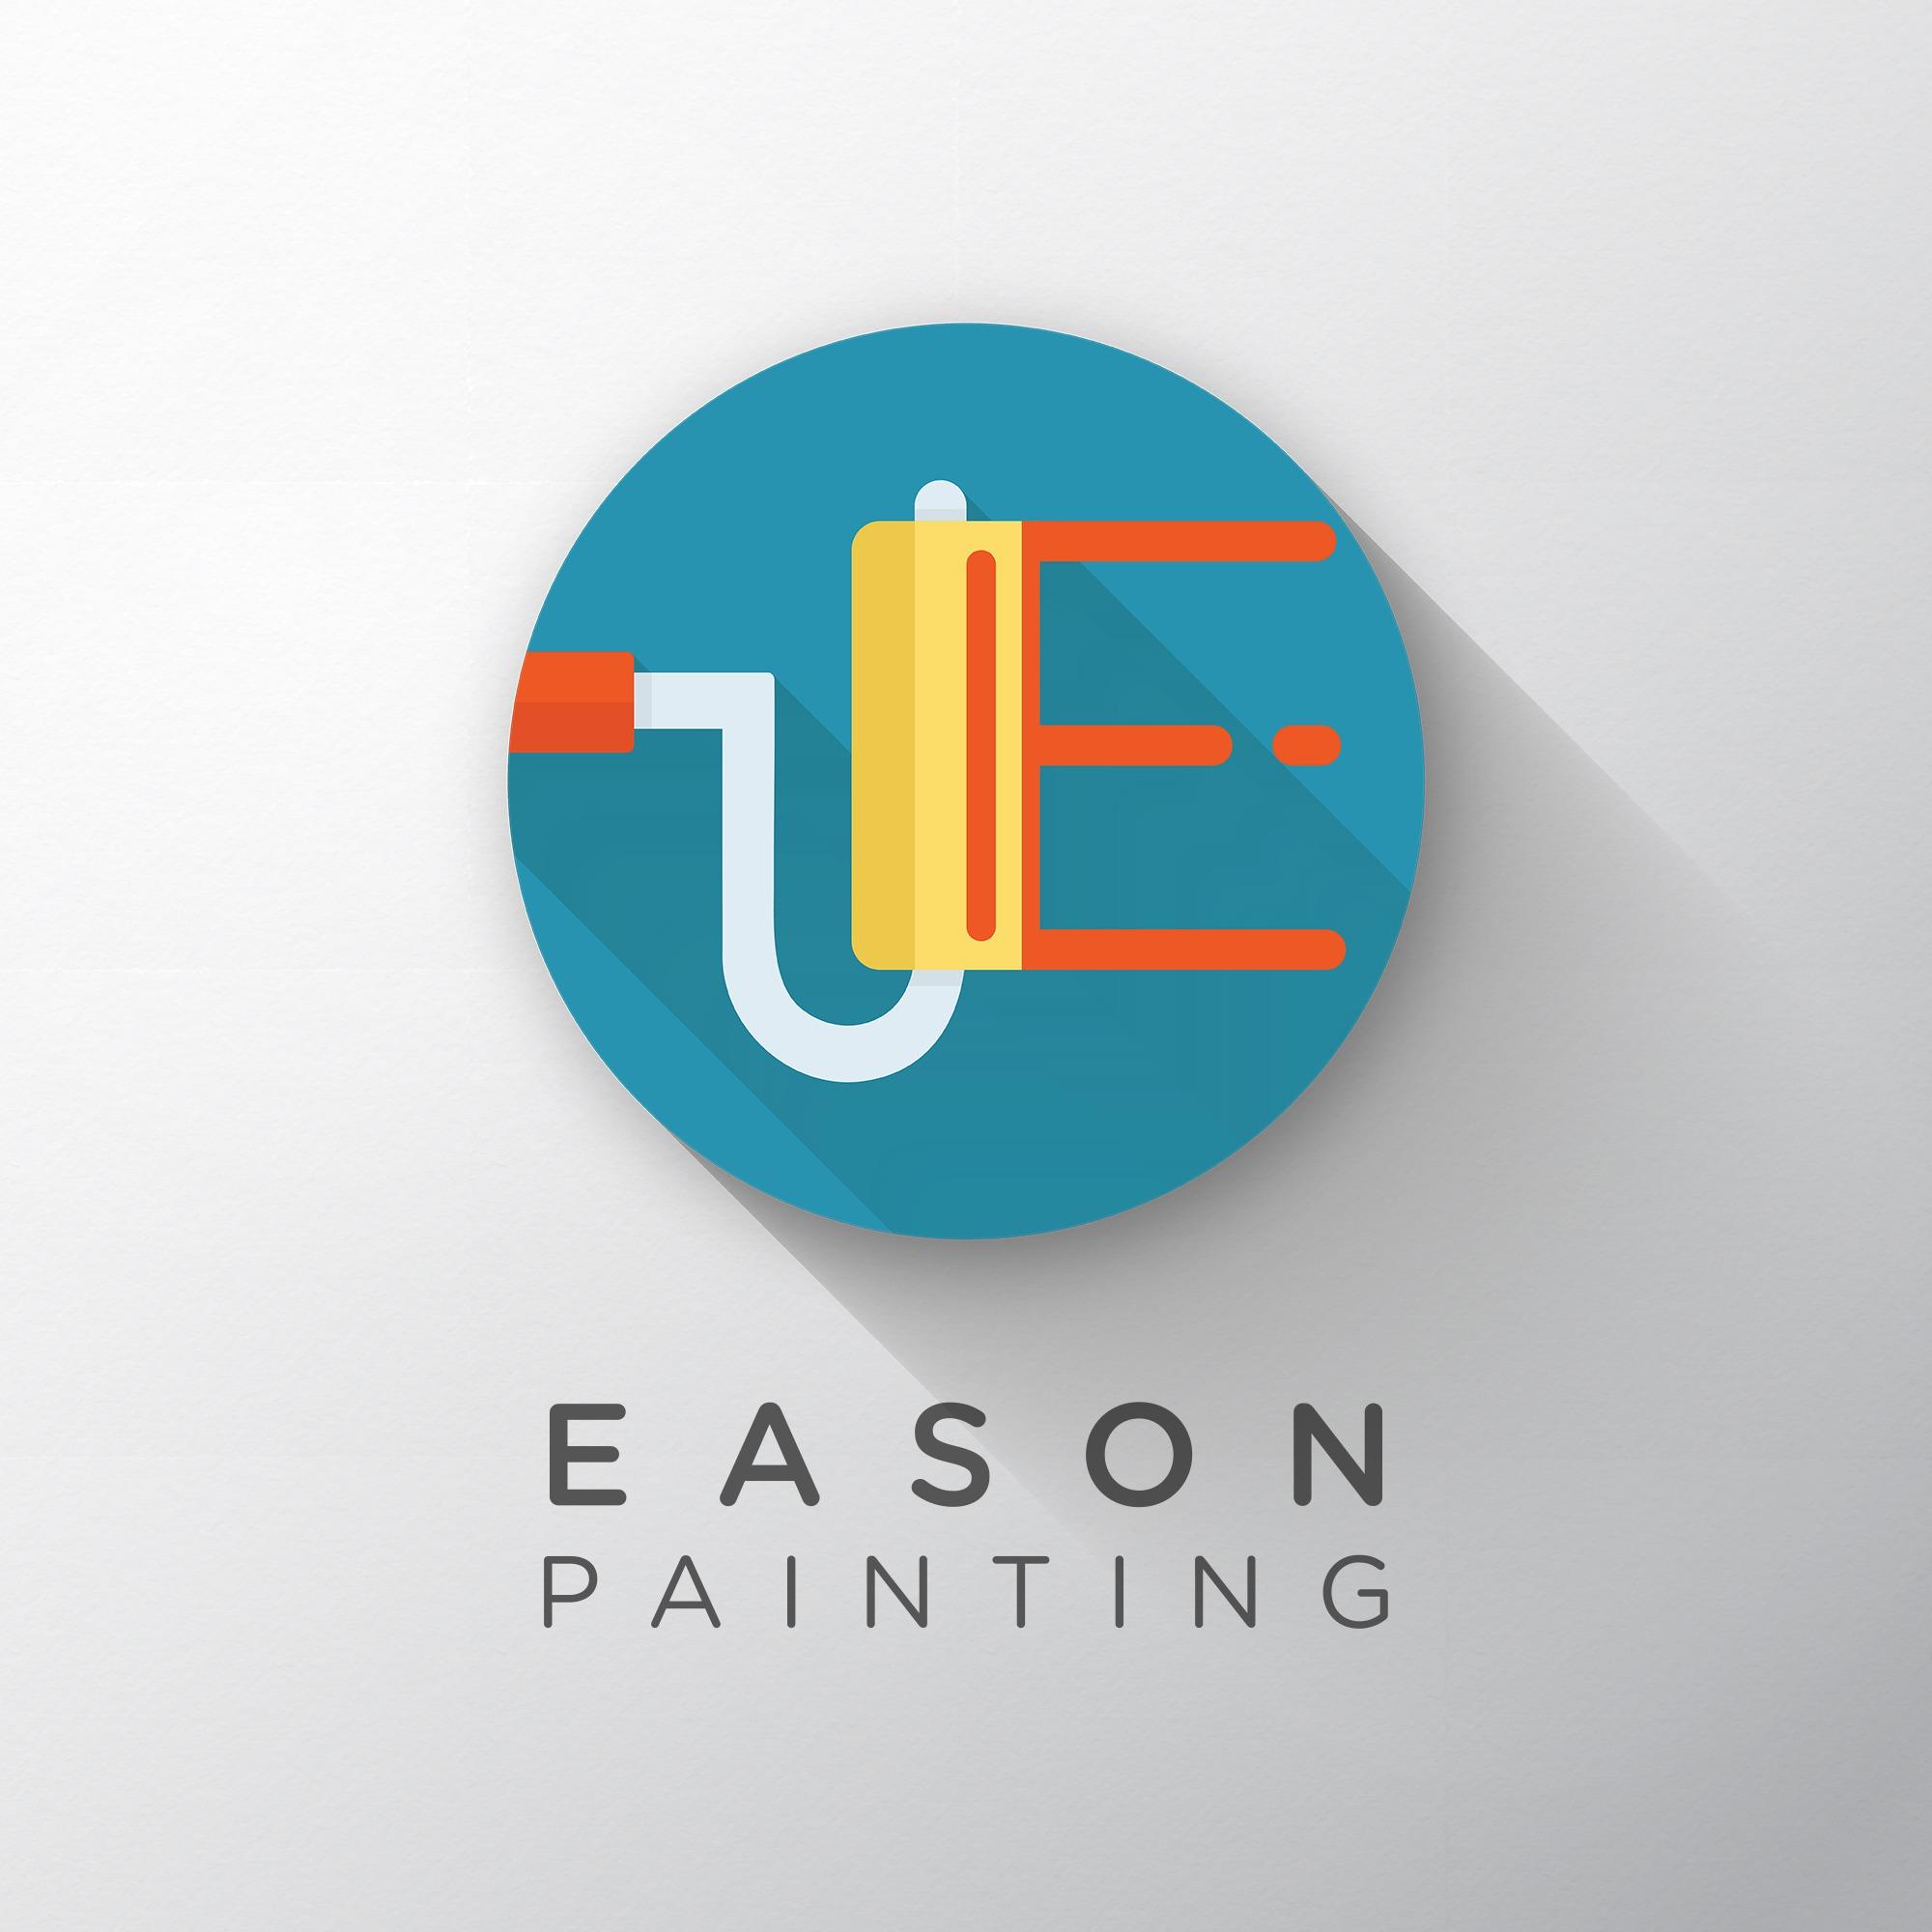 Eason Painting Inc - Clinton Township, MI 48038 - (586)465-5081 | ShowMeLocal.com